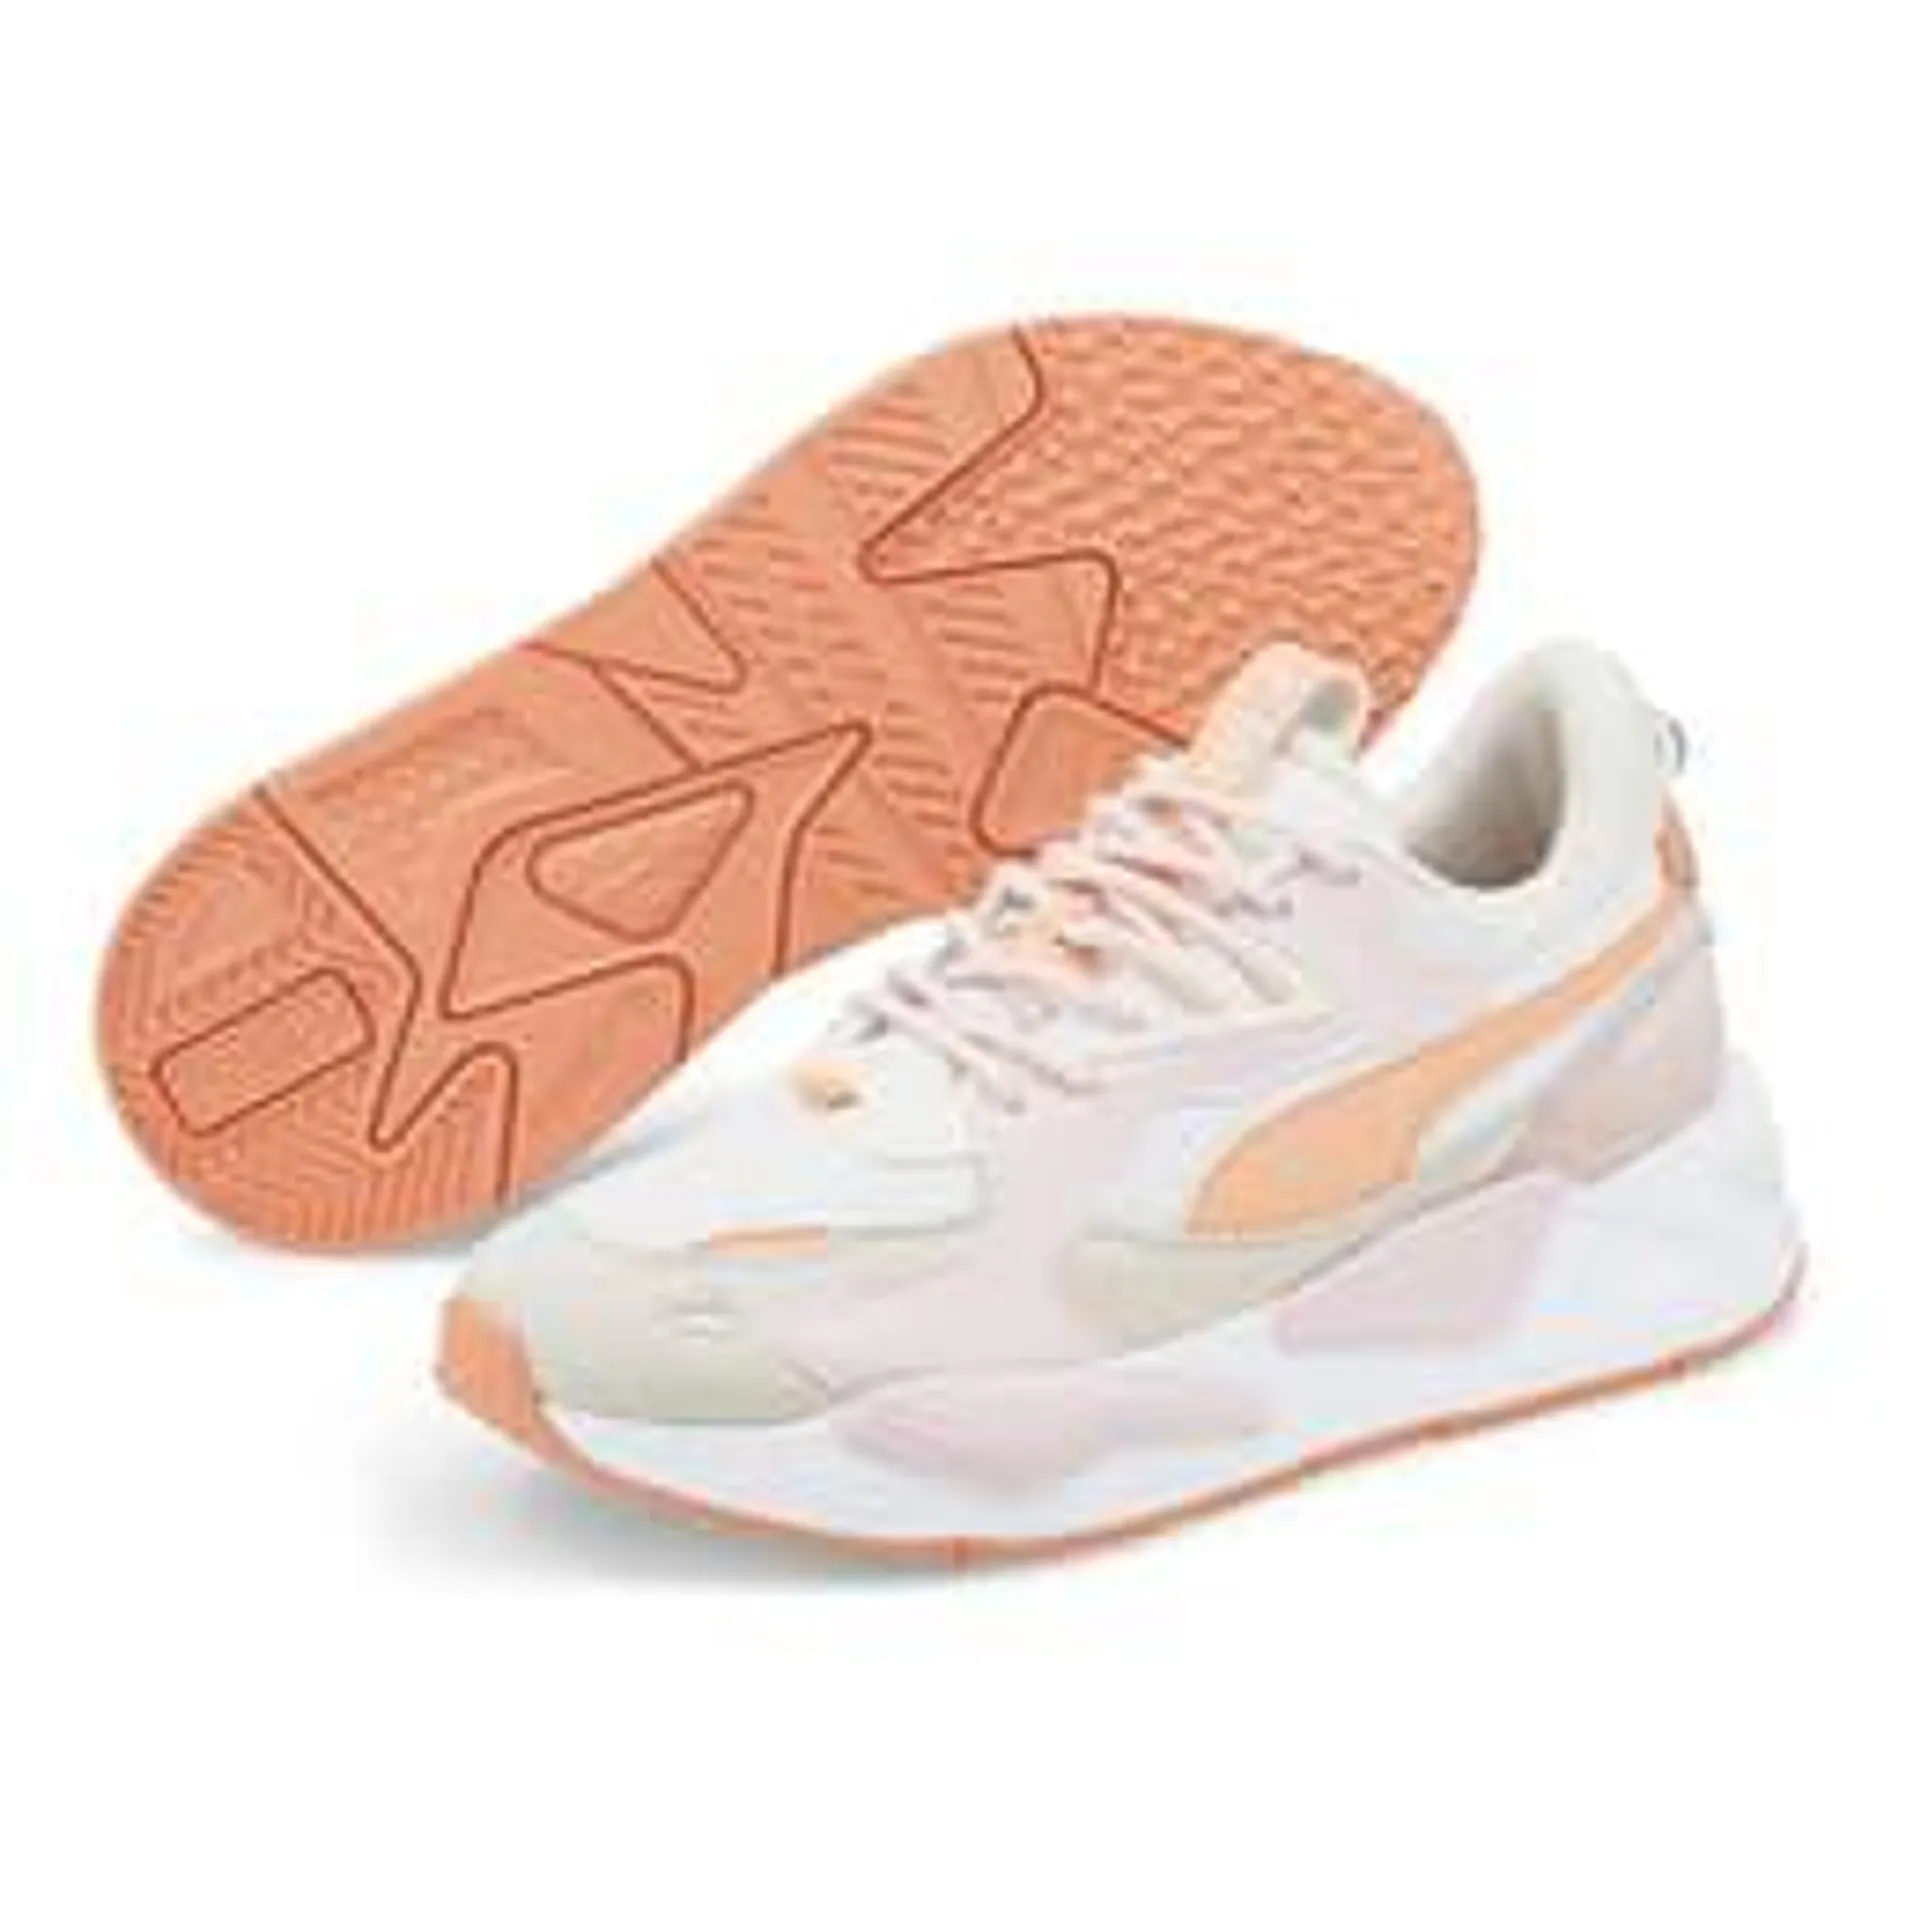 Chaussures Puma RS-Z Reinvent blanc rose clair orange femme